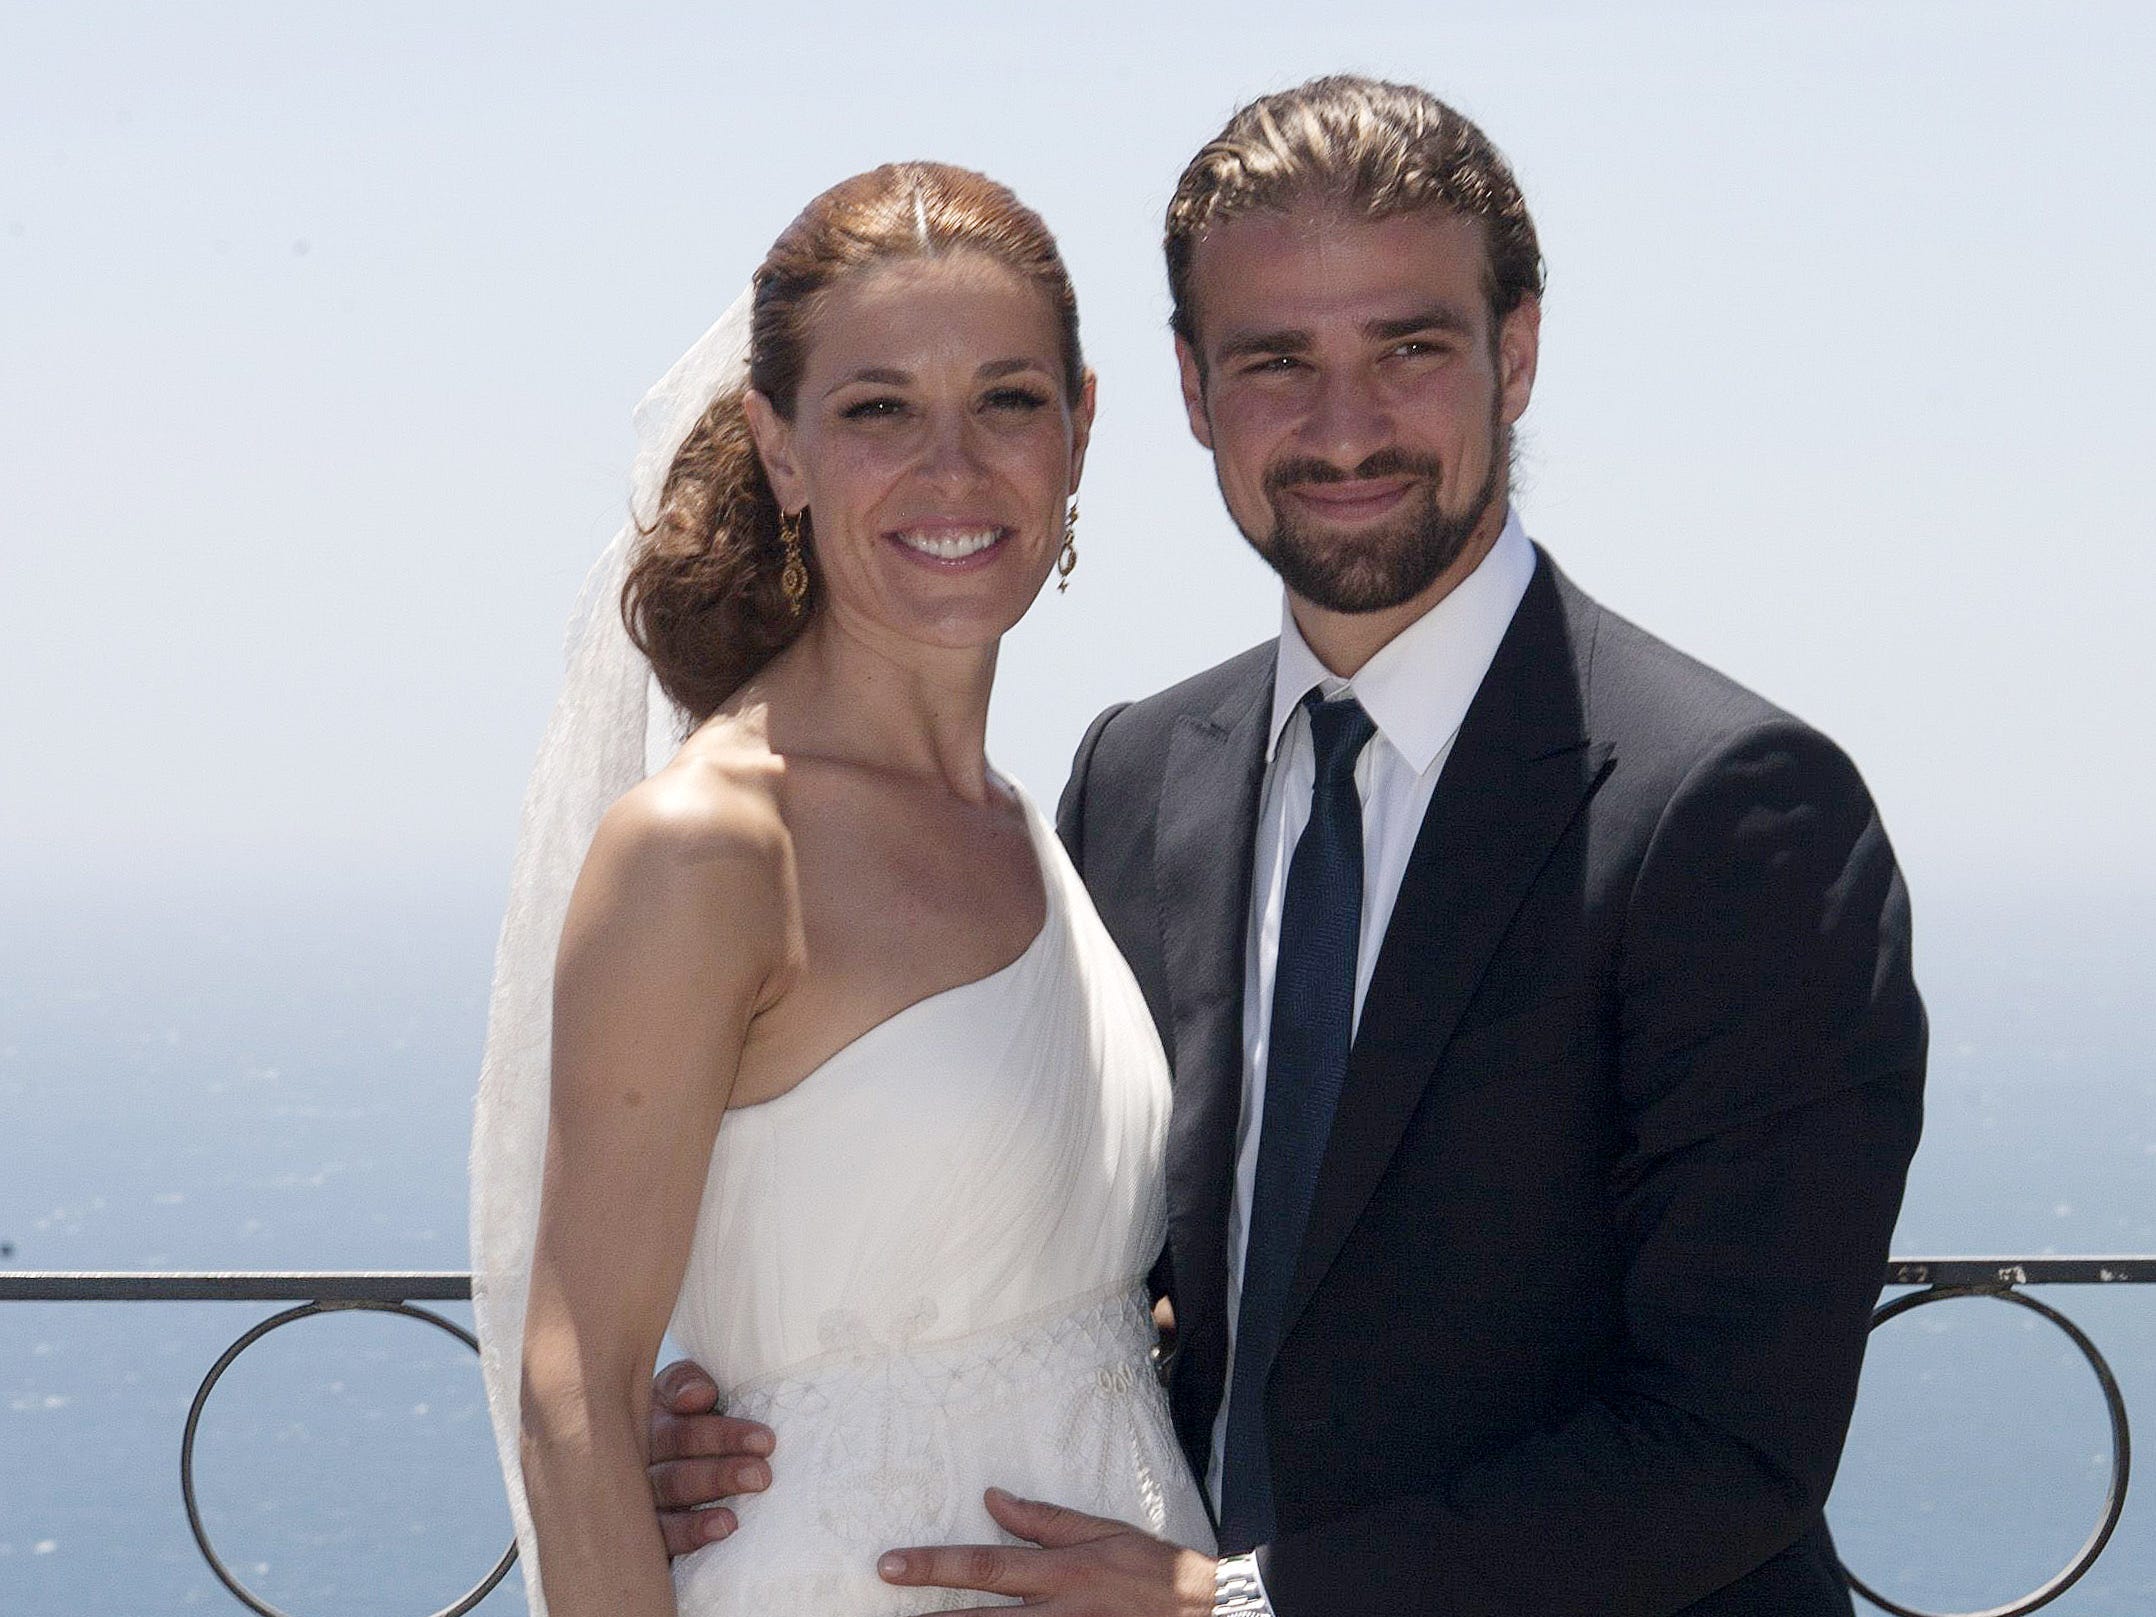 Raquel Sánchez-Silva und Mario Biondo heiraten am 22. Juni 2012 in Taormina, Italien.